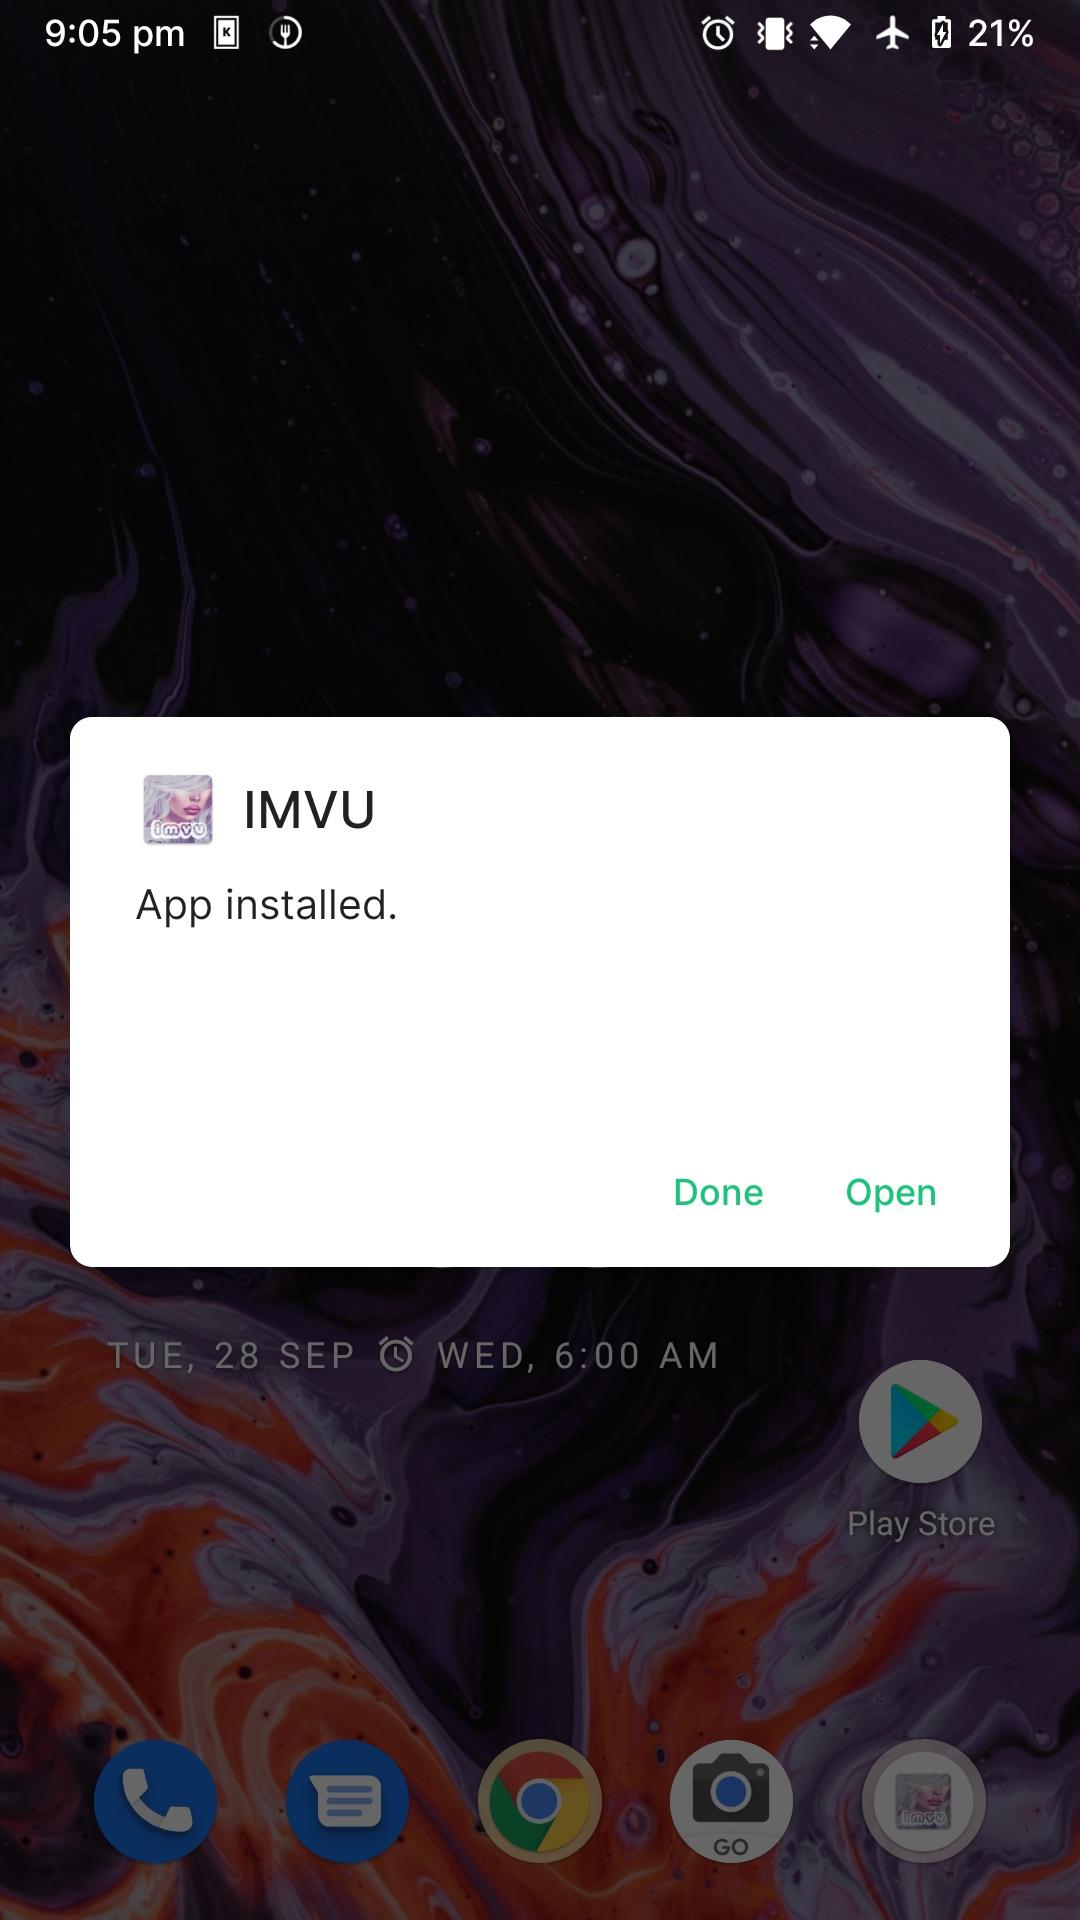 IMVU APK installed